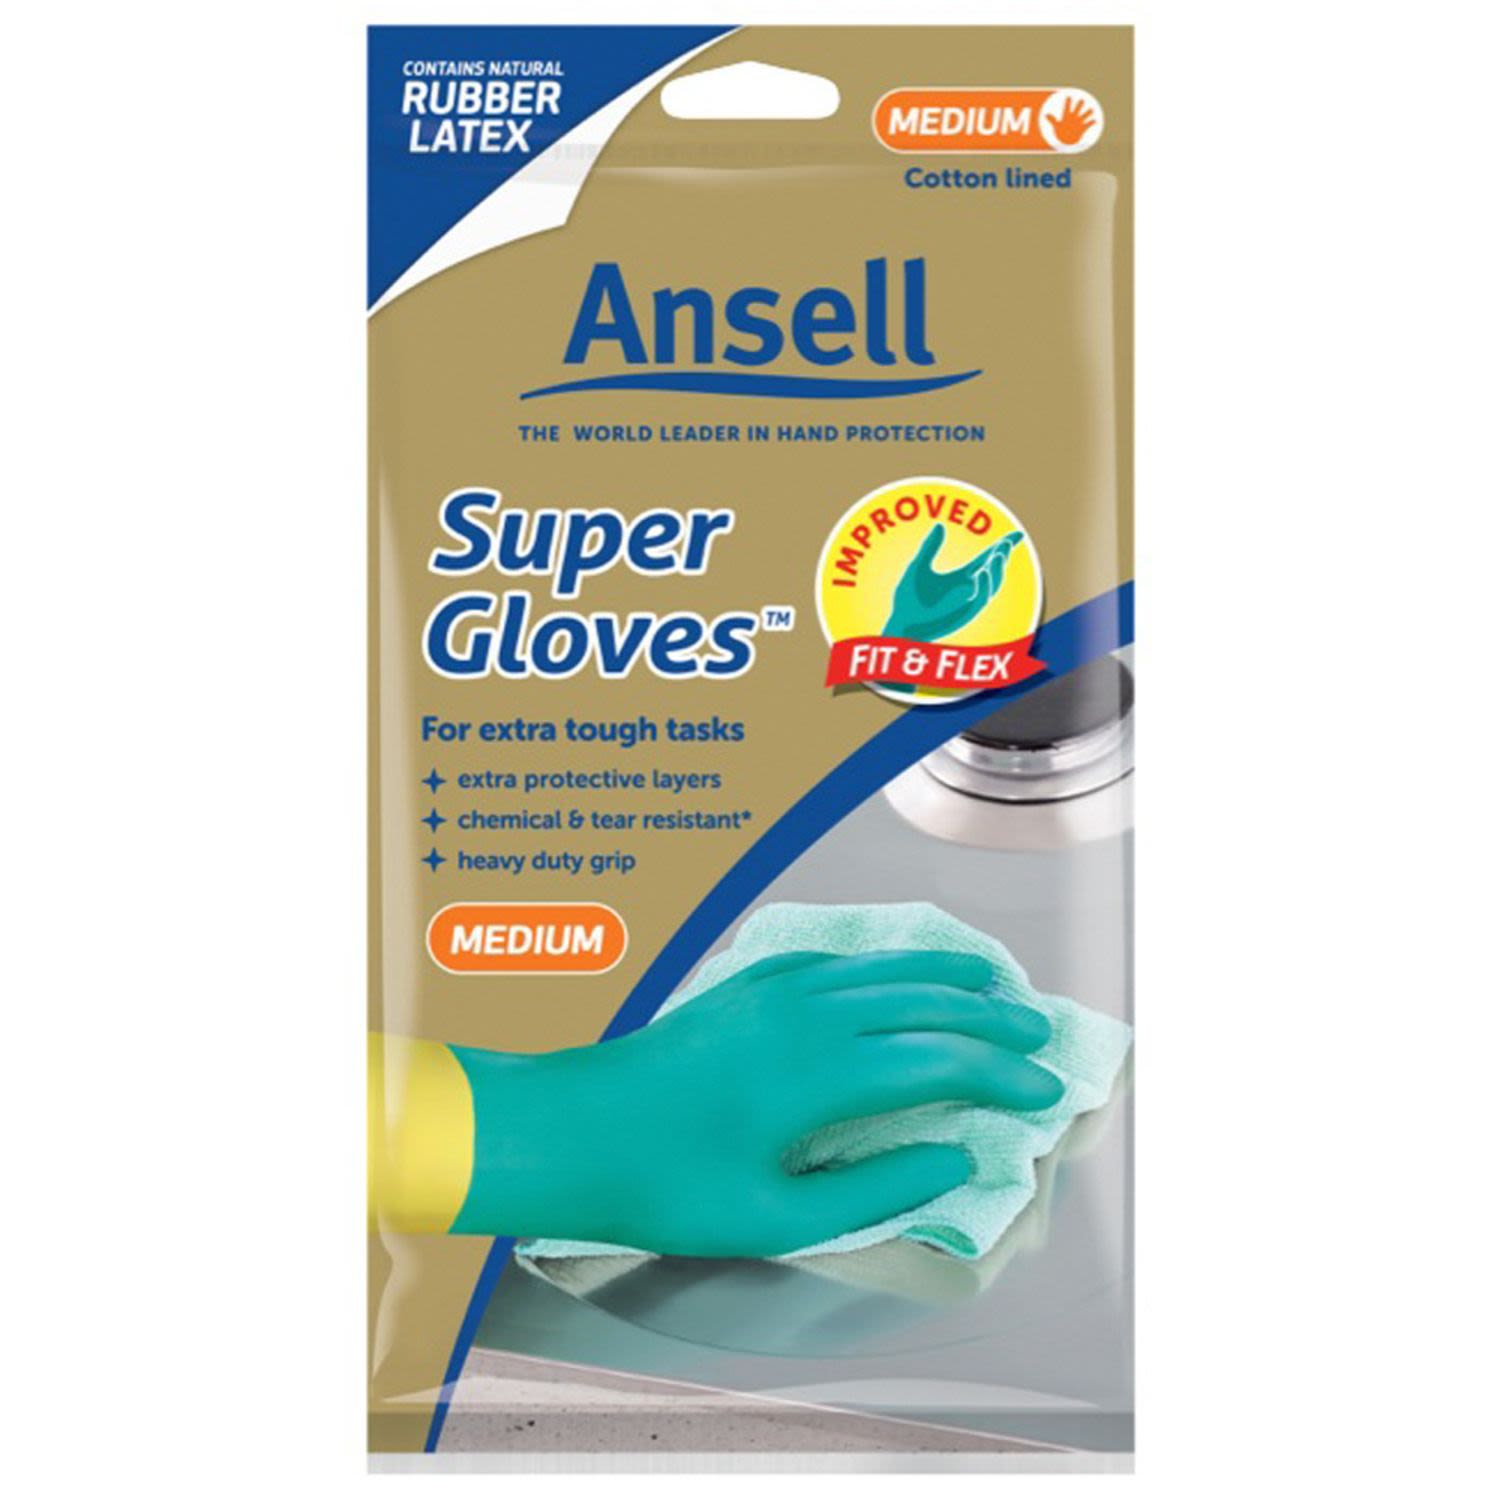 Ansell Gloves Super Medium Size 8, 1 Each